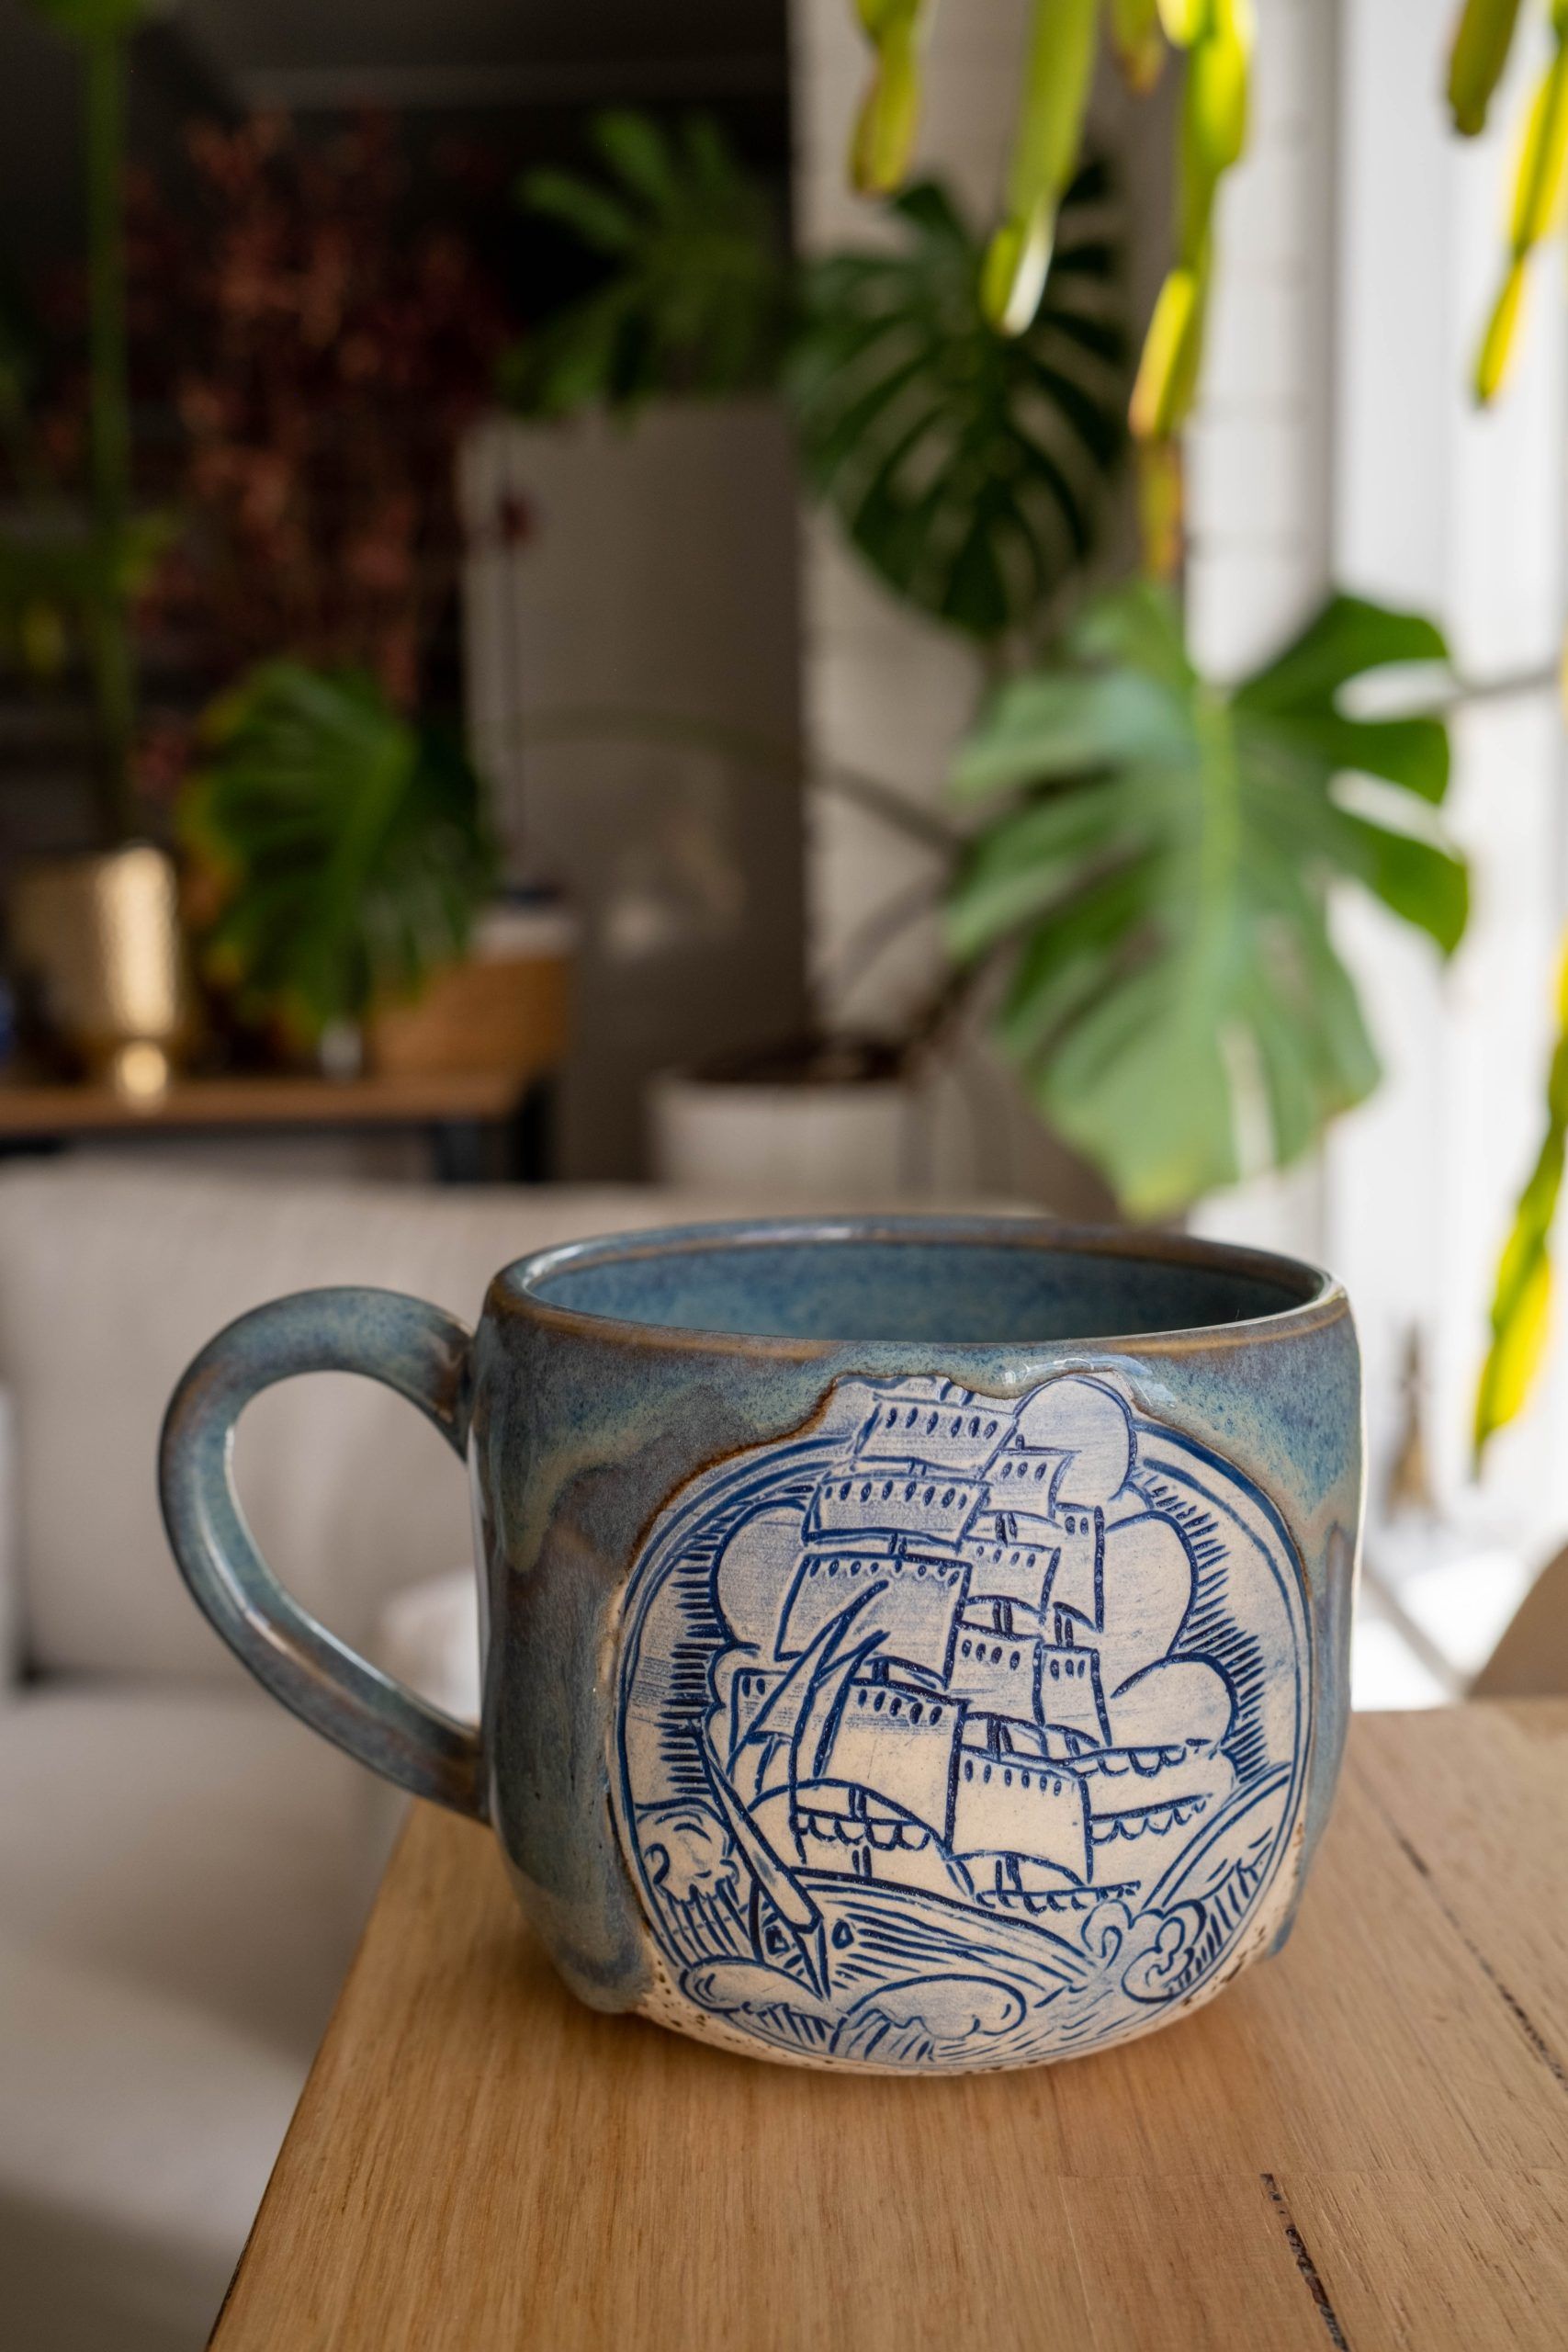 image of a mug with a ship